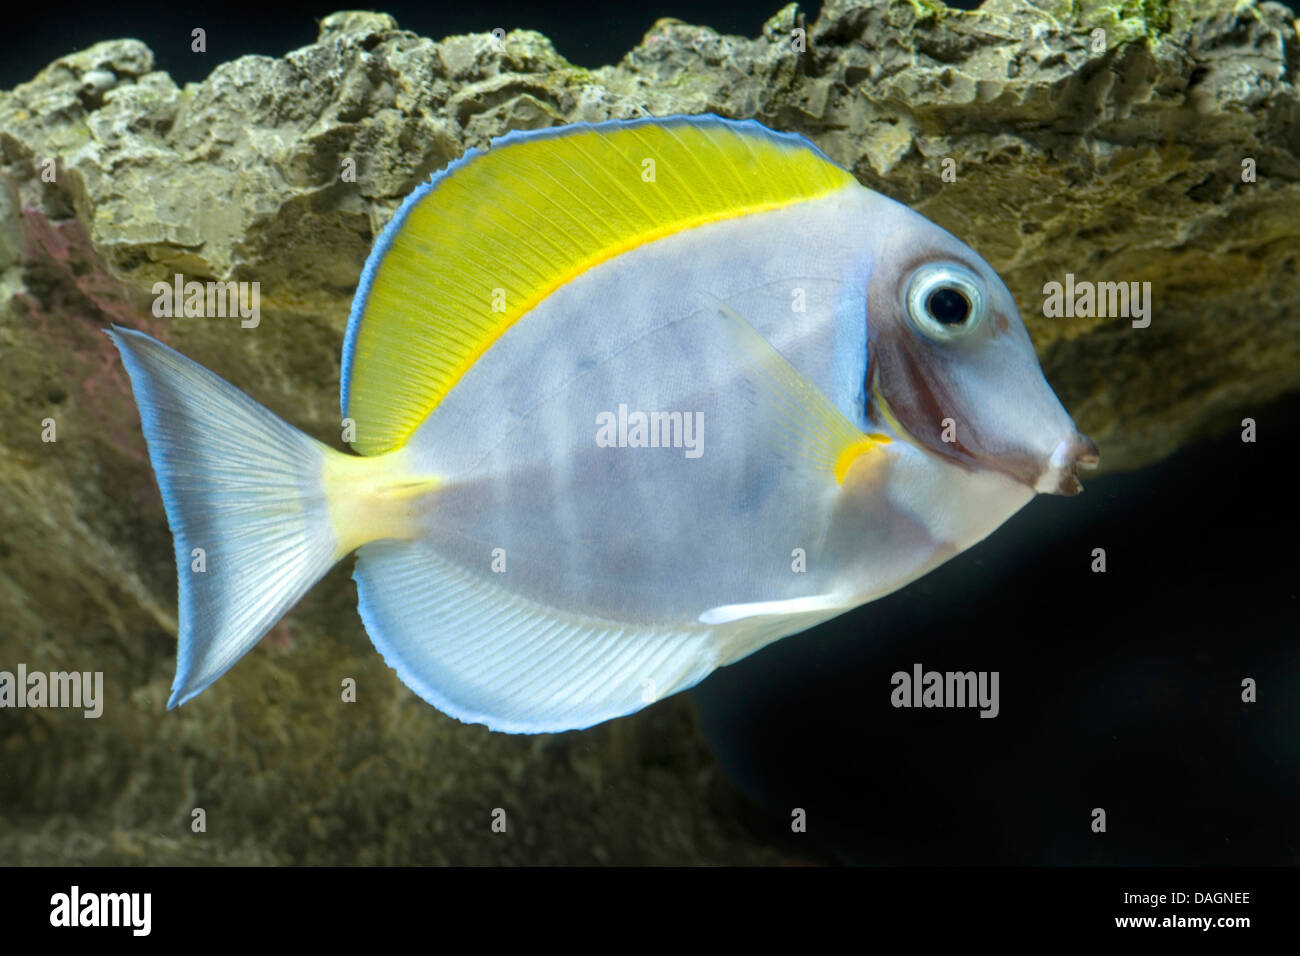 Powderblue surgeonfish (Acanthurus leucosternon) Stock Photo